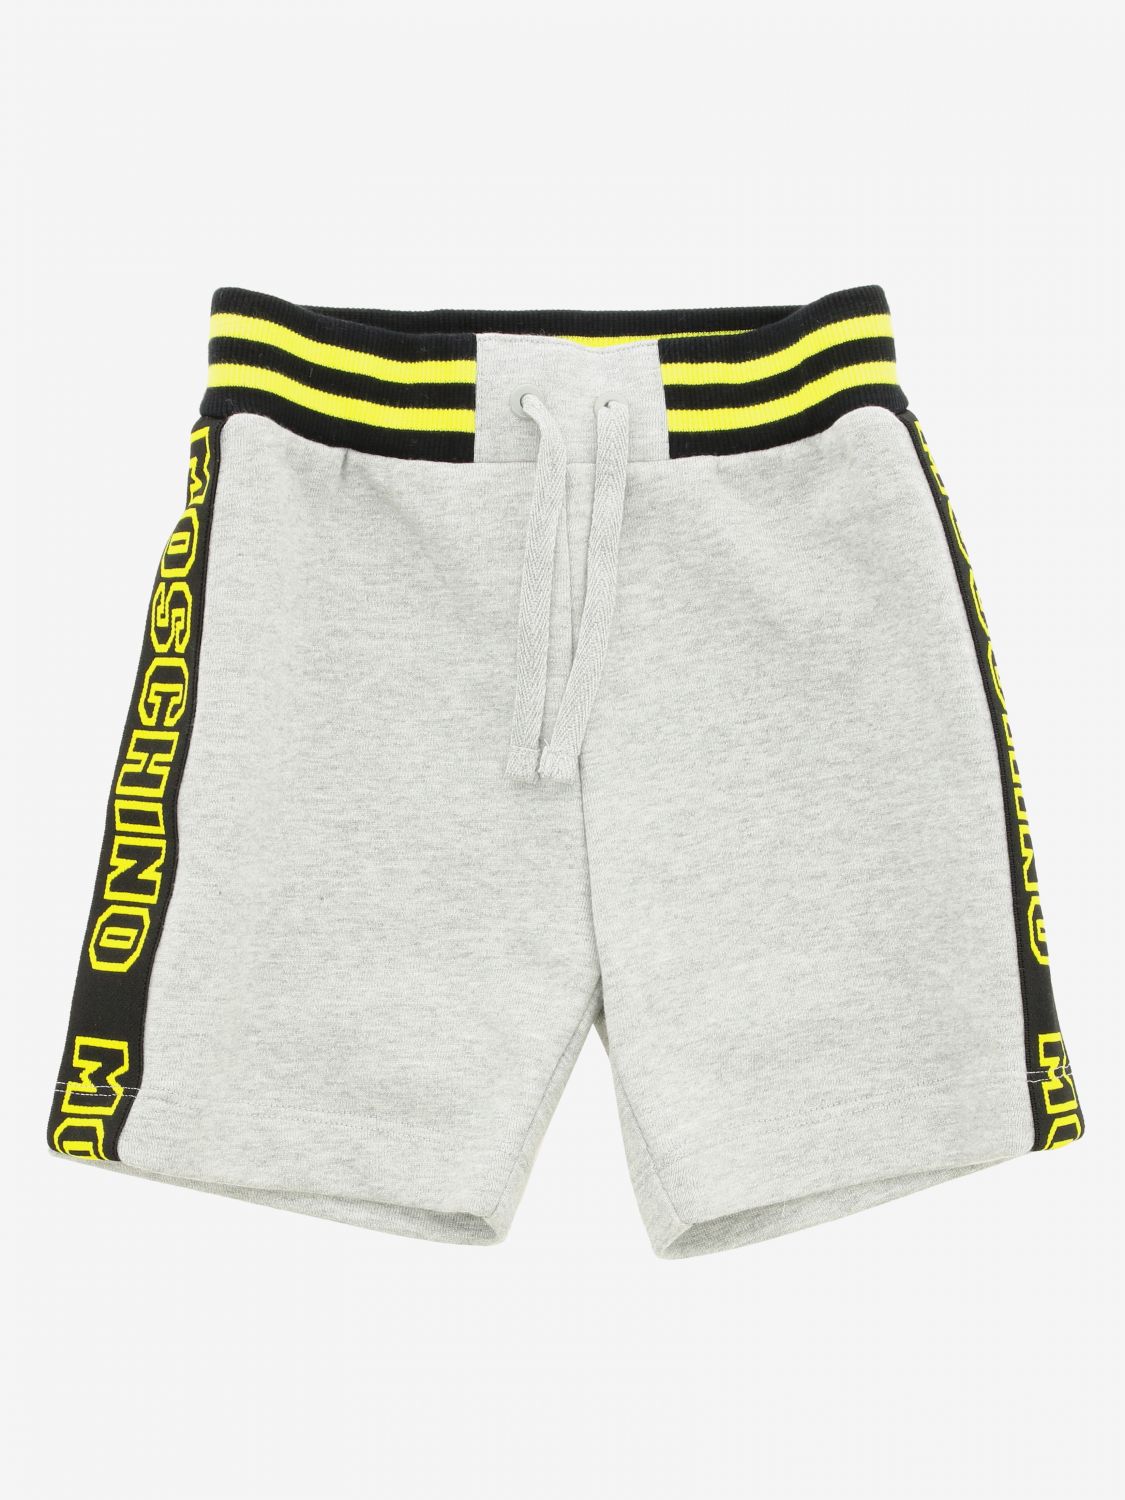 moschino grey shorts